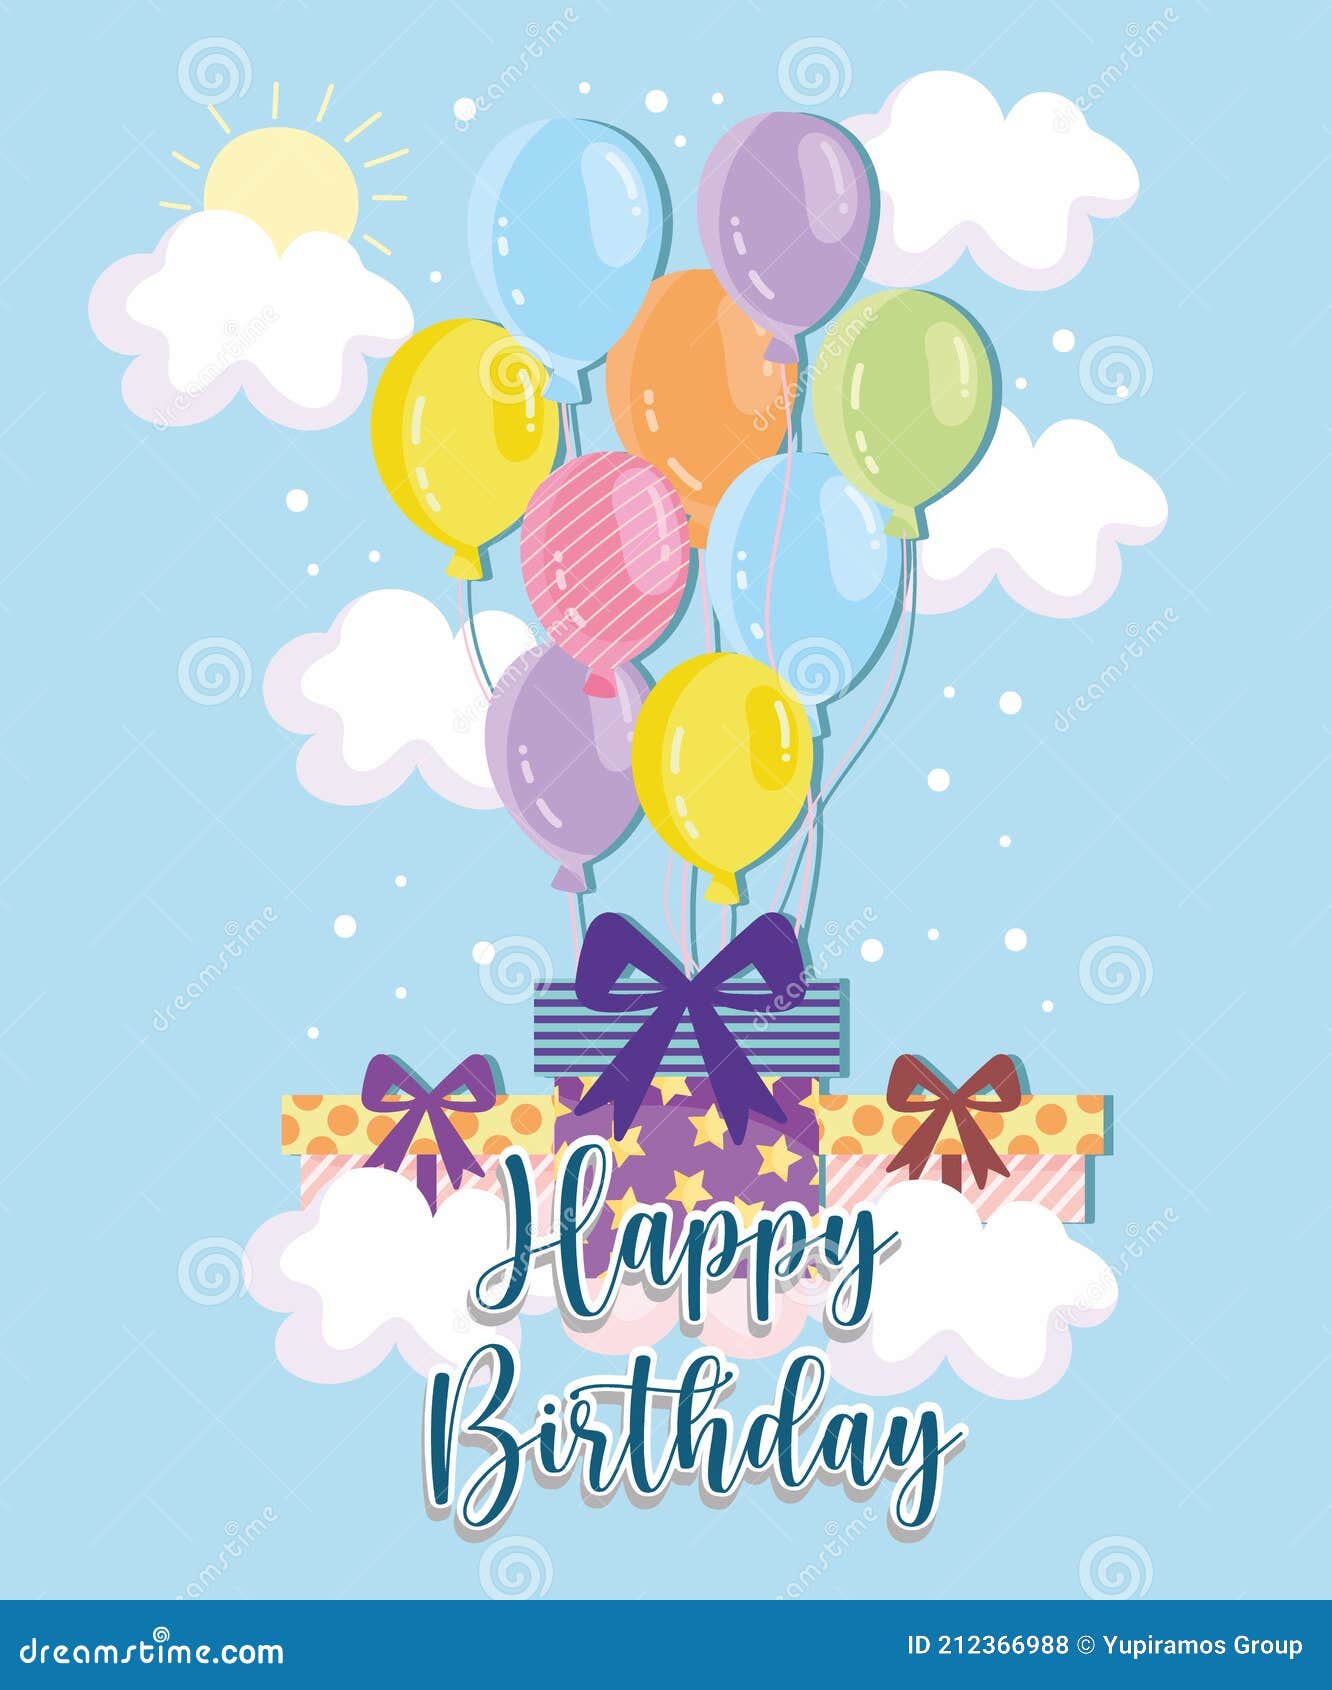 Birthday balloons gifts stock vector. Illustration of happy - 212366988